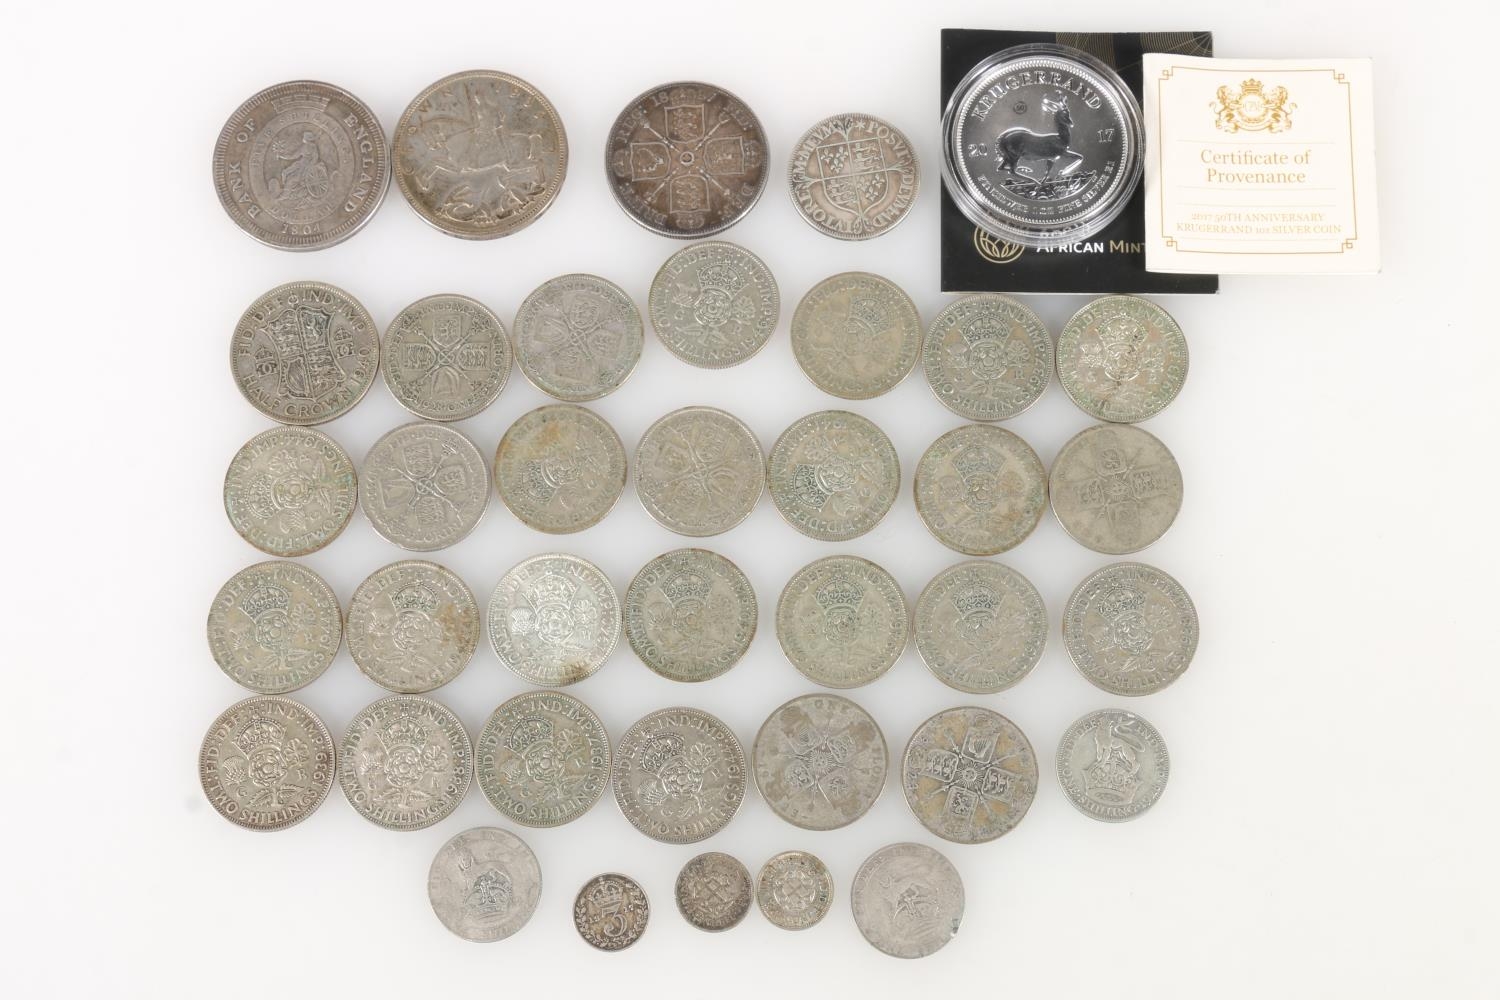 UNITED KINGDOM Queen Victoria (1837-1901) double florin 1887, 350g of 500 grade silver (1920-1946)